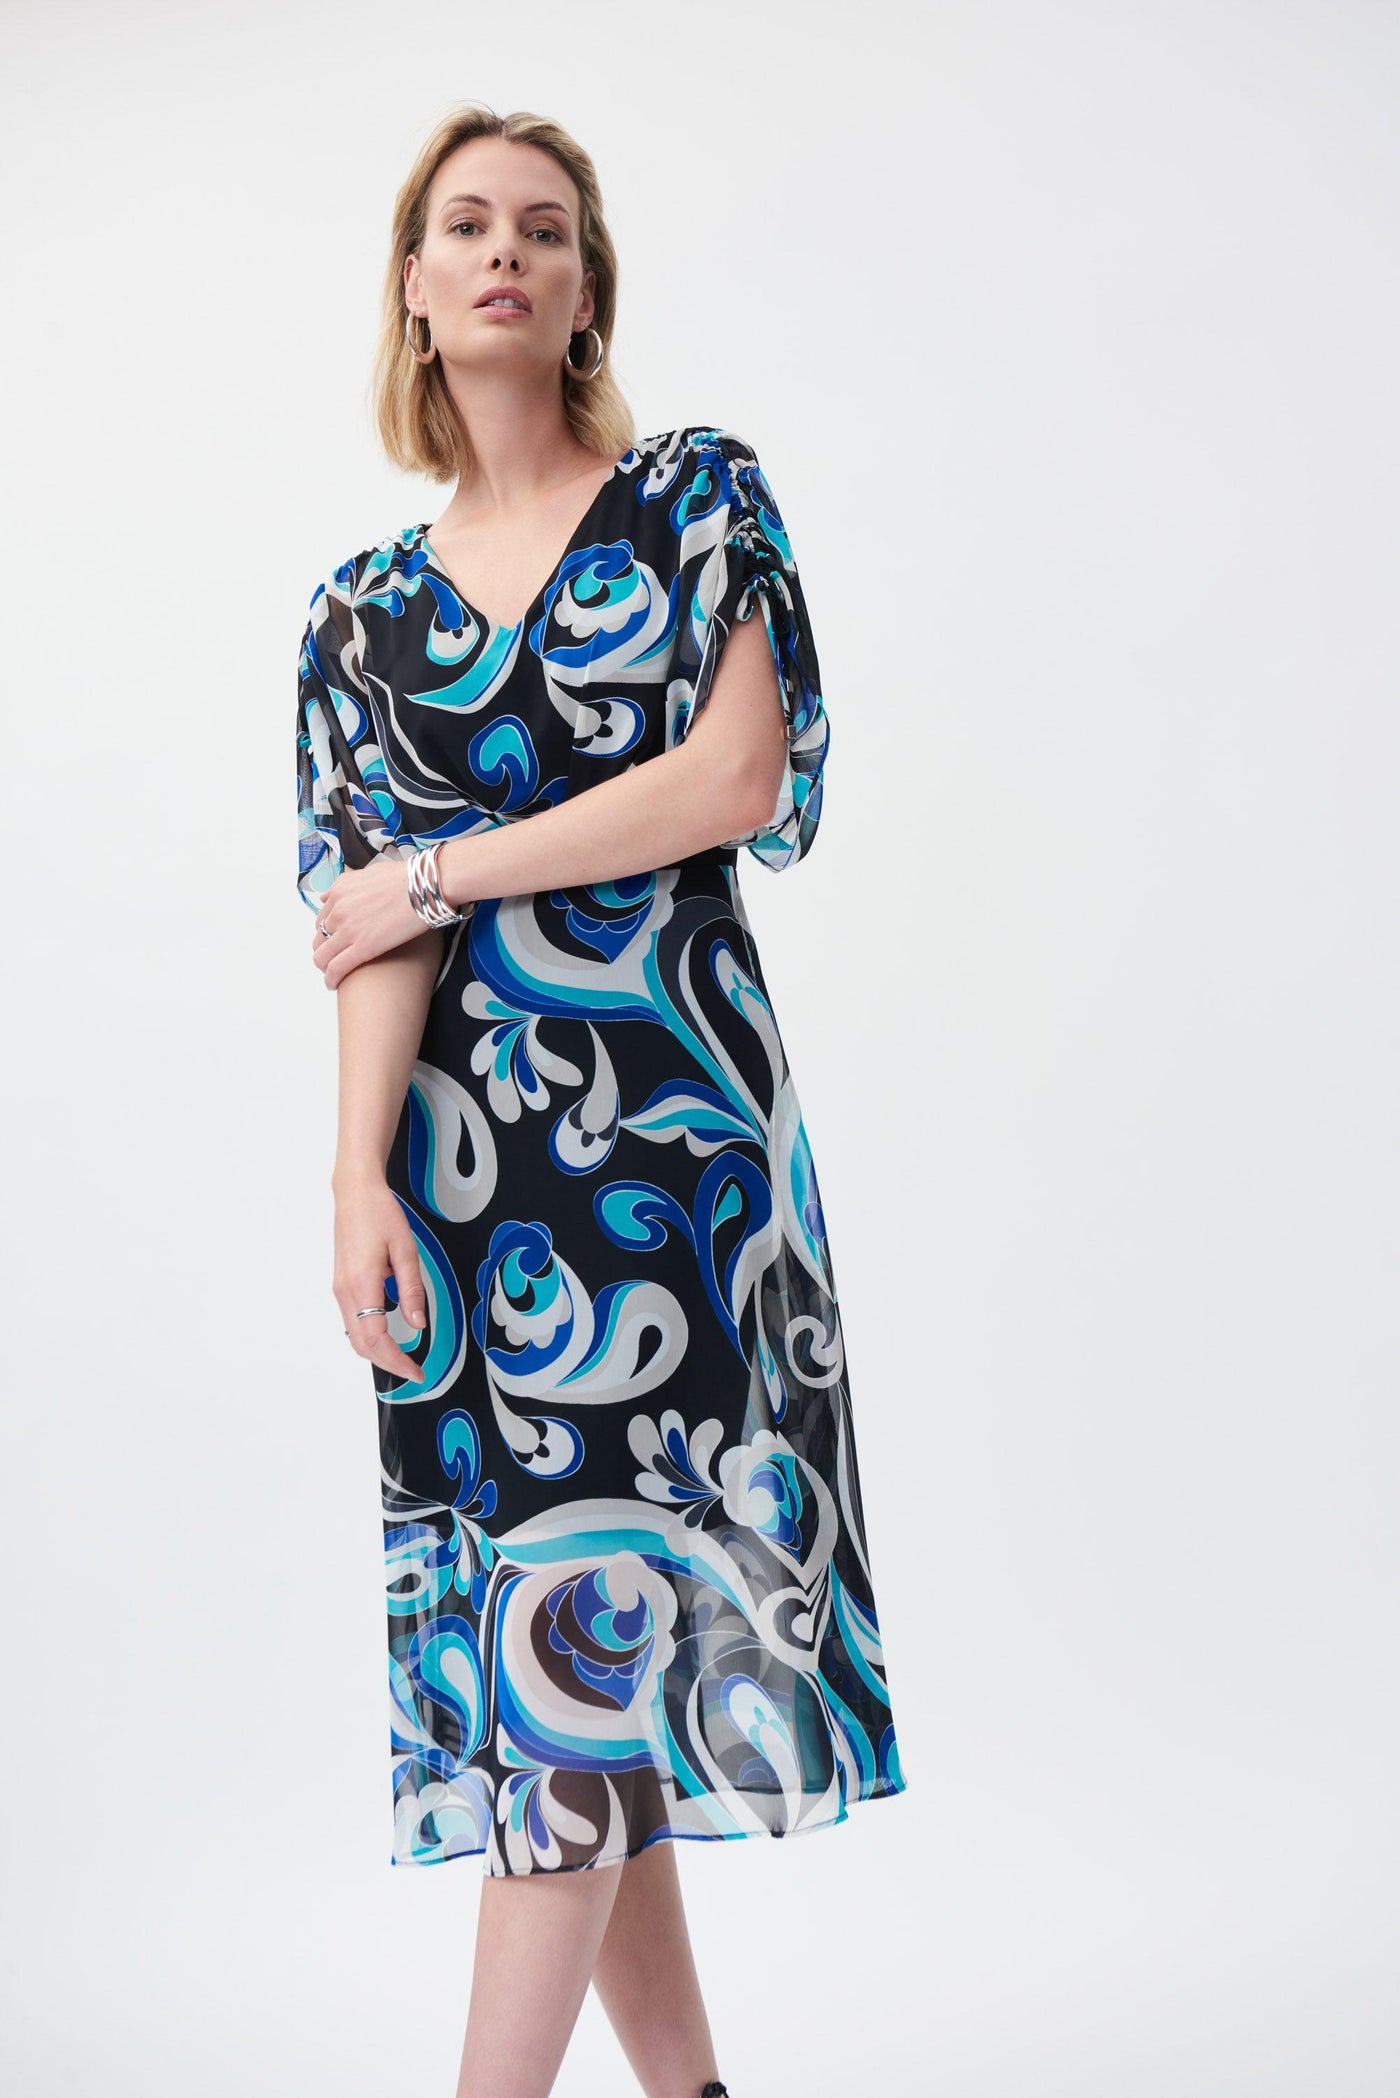 Sheer Overlay Dress - Blue Paisley